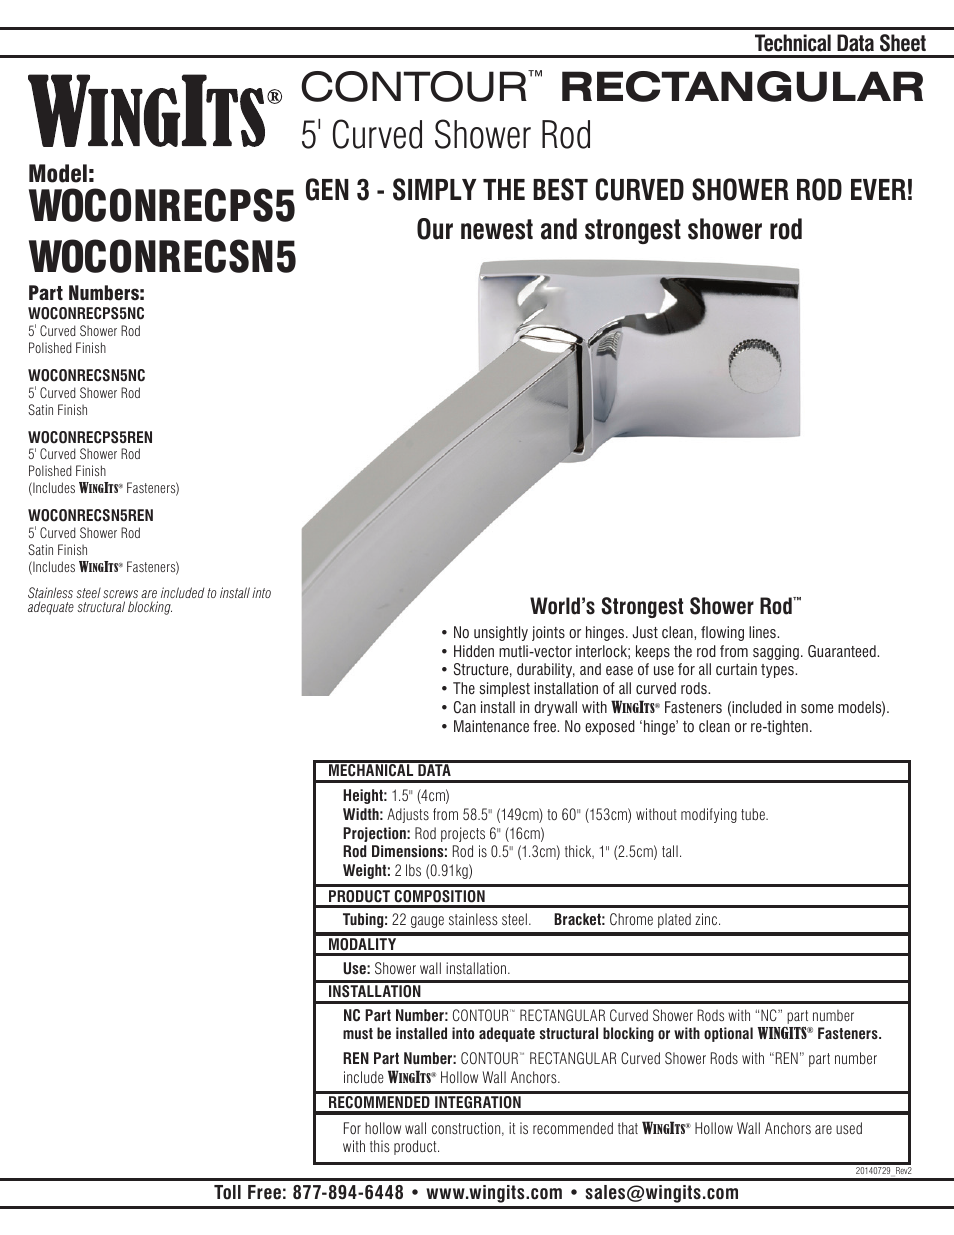 CONTOUR Curved Shower Rod WOCONREC5